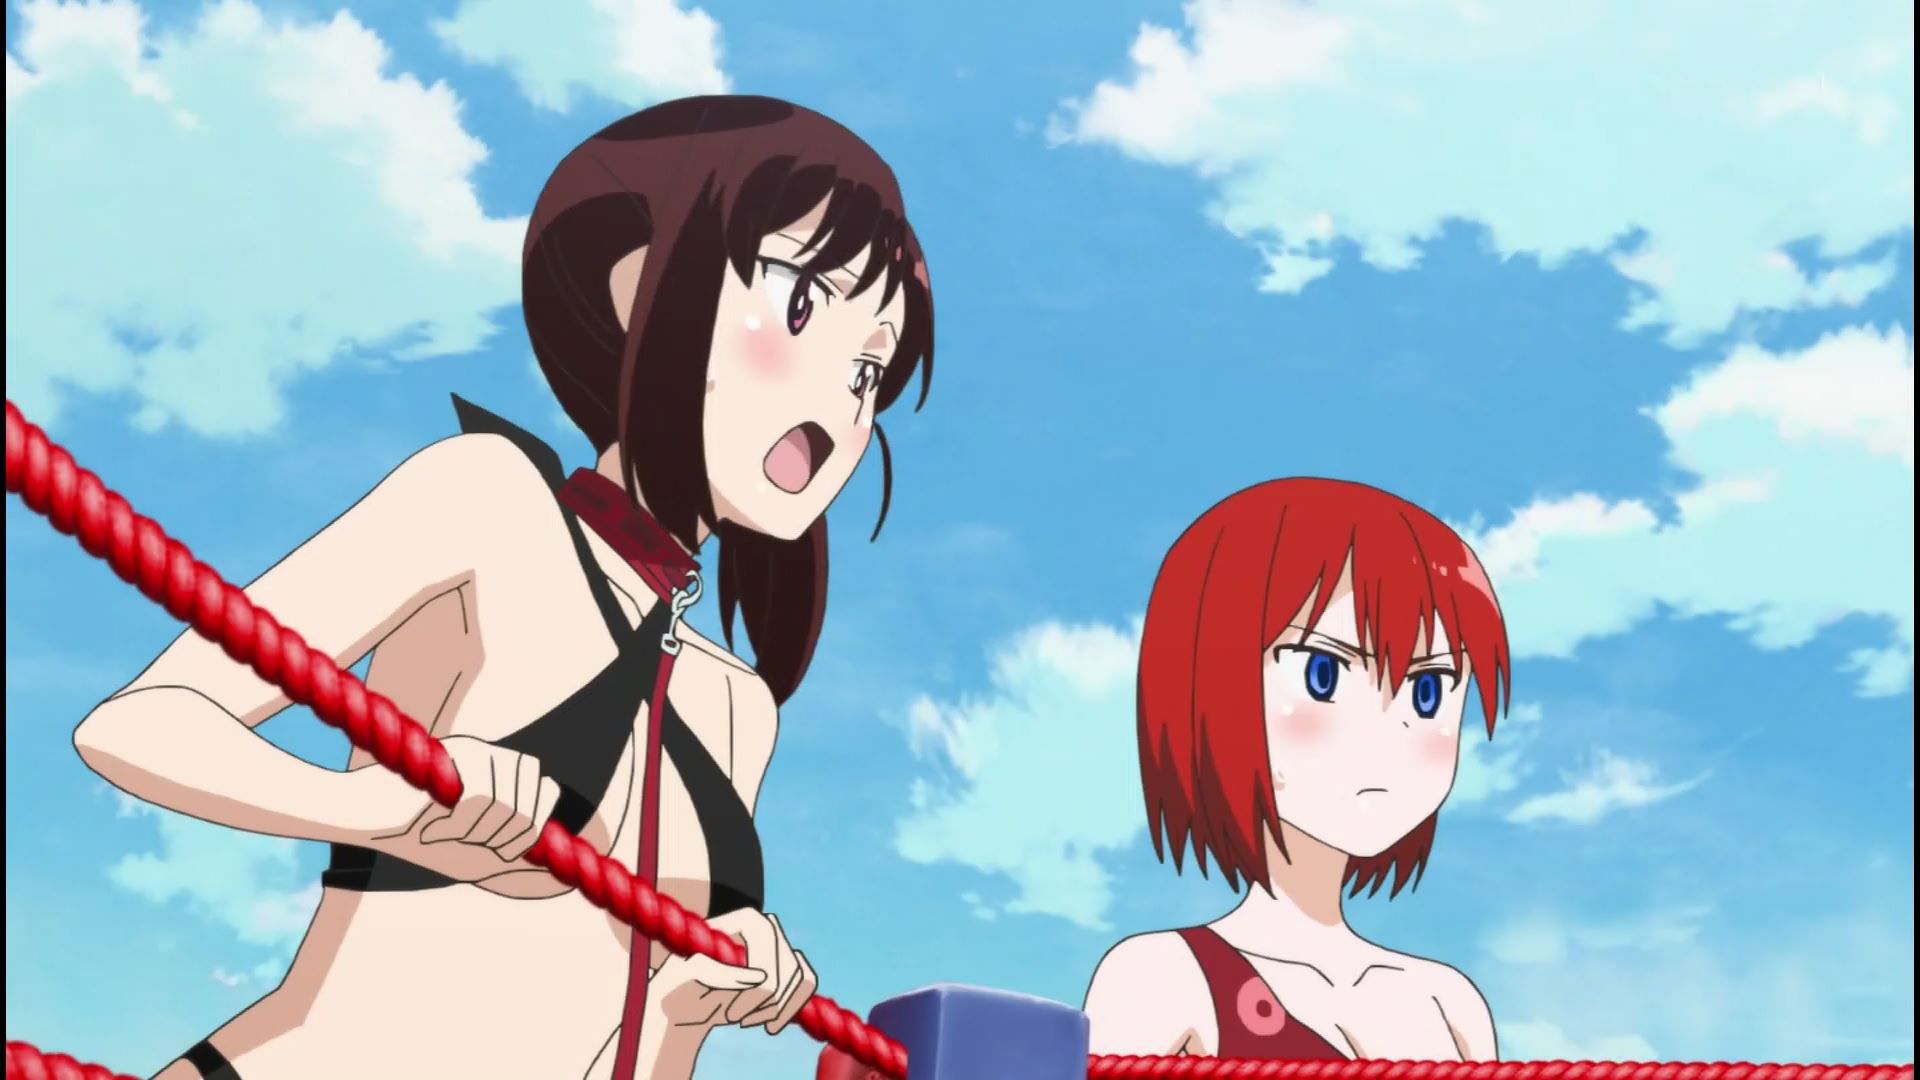 Anime [Shimarenuse] Seaton Gakuen] scene that girls become insanely erotic costumes in episode 12 15